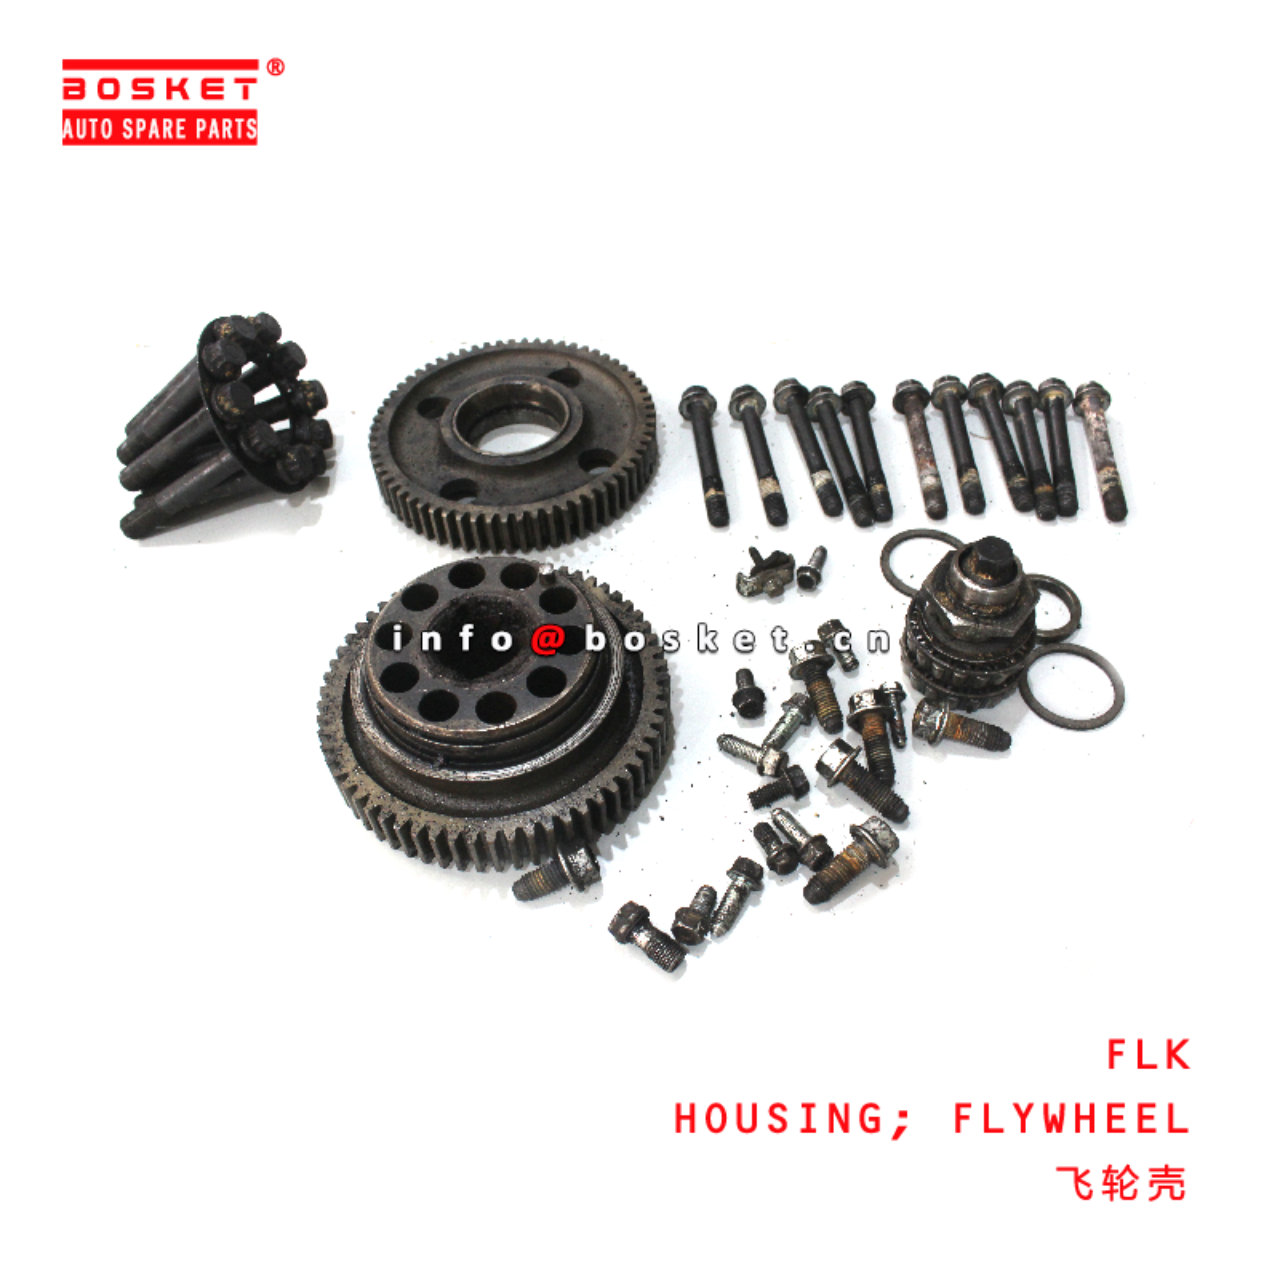 FLK Flywheel Housing suitable for ISUZU CYZ51  FLK